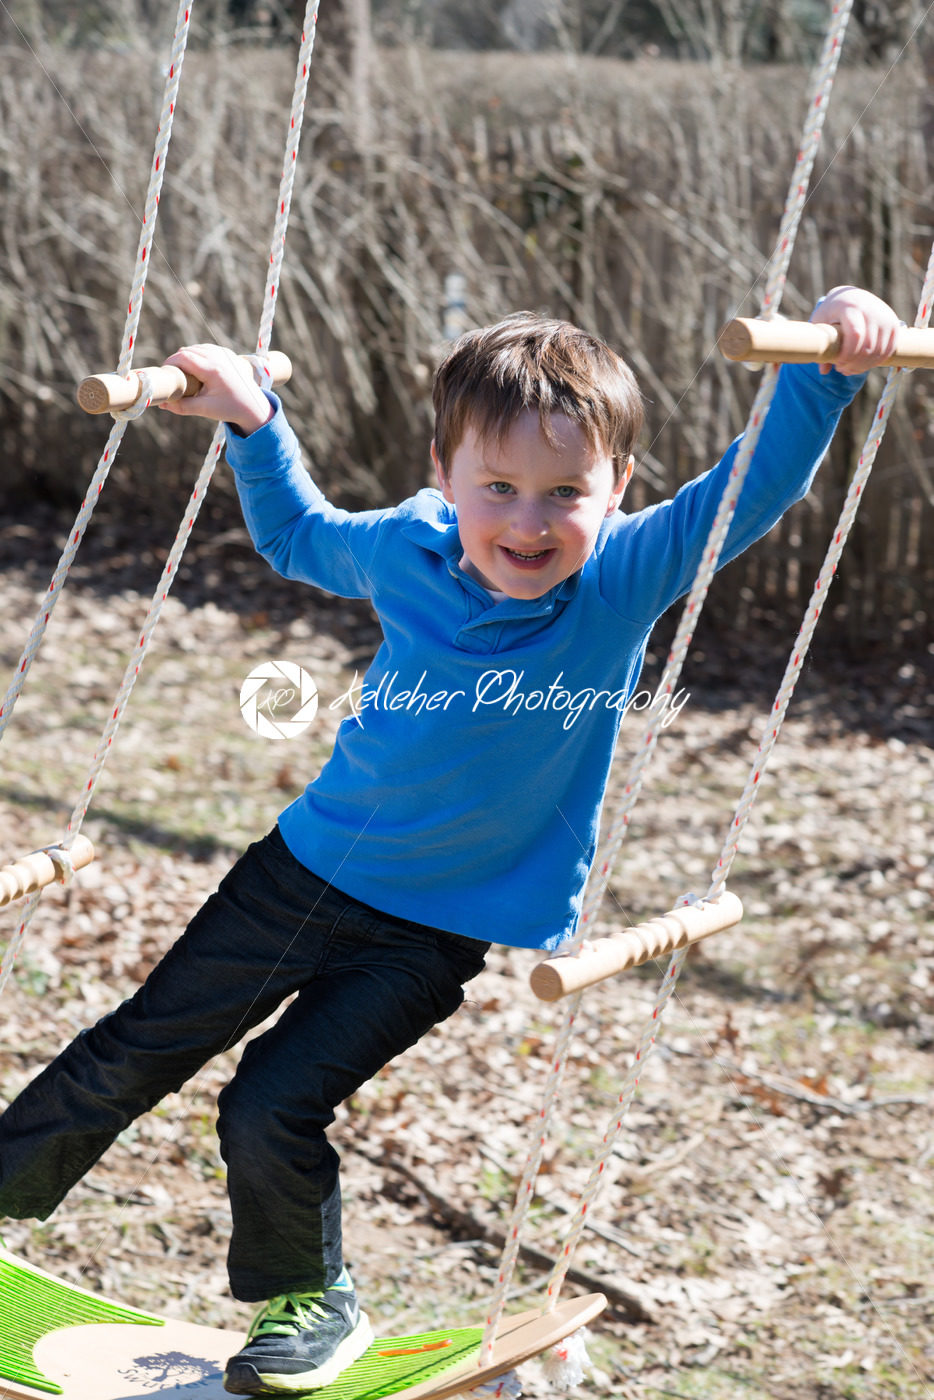 Young boy outside in backyard having fun on a swing - Kelleher Photography Store